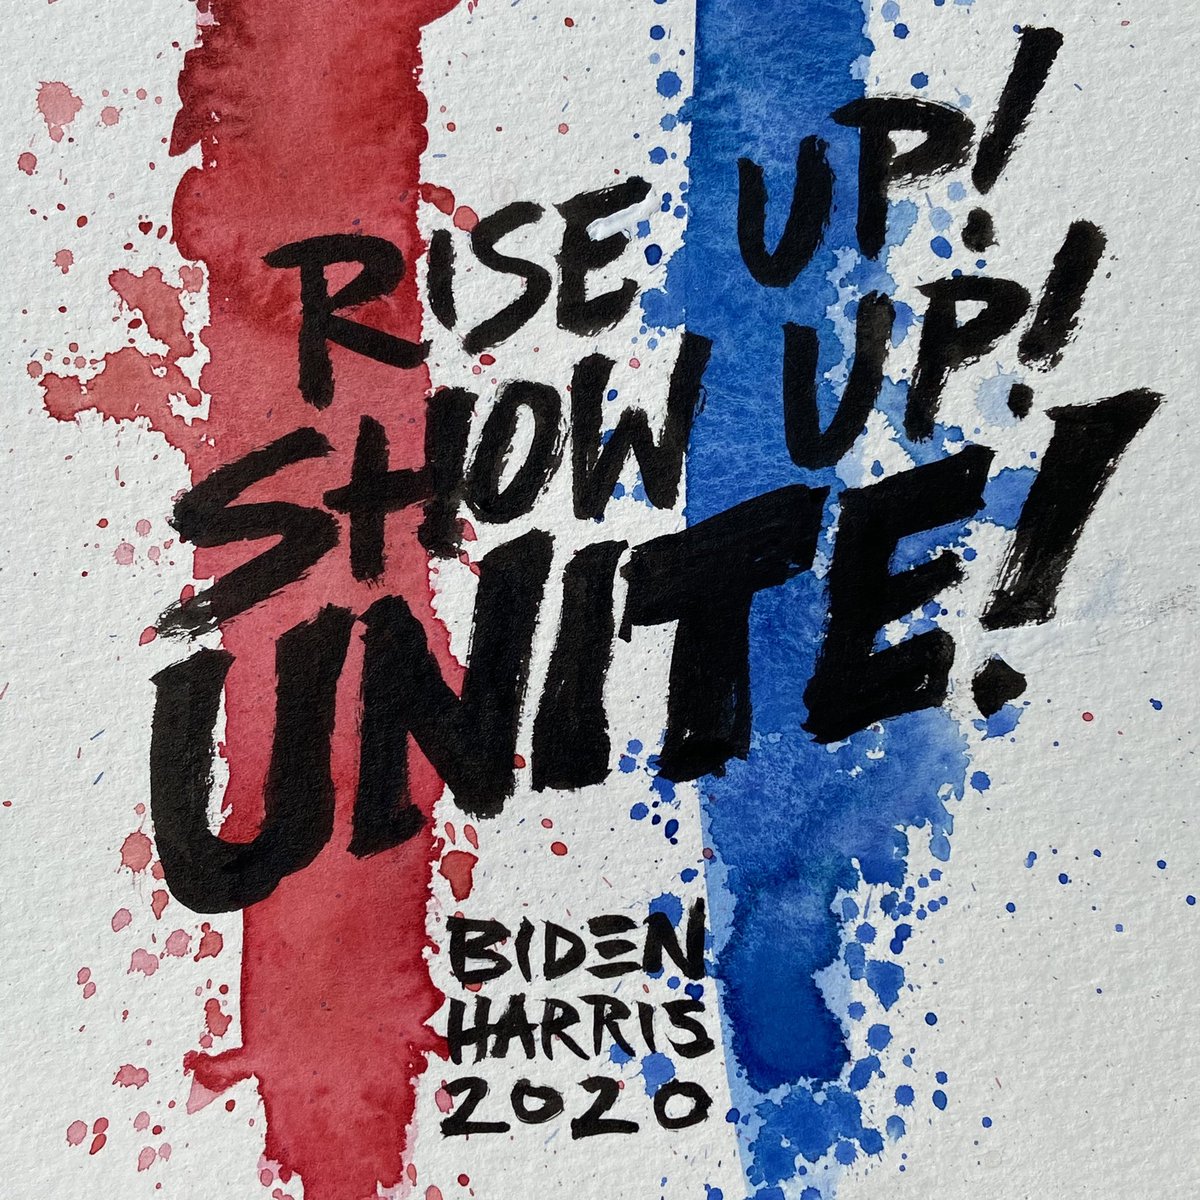 All together now. #riseupshowupunite #BidenHarris2020